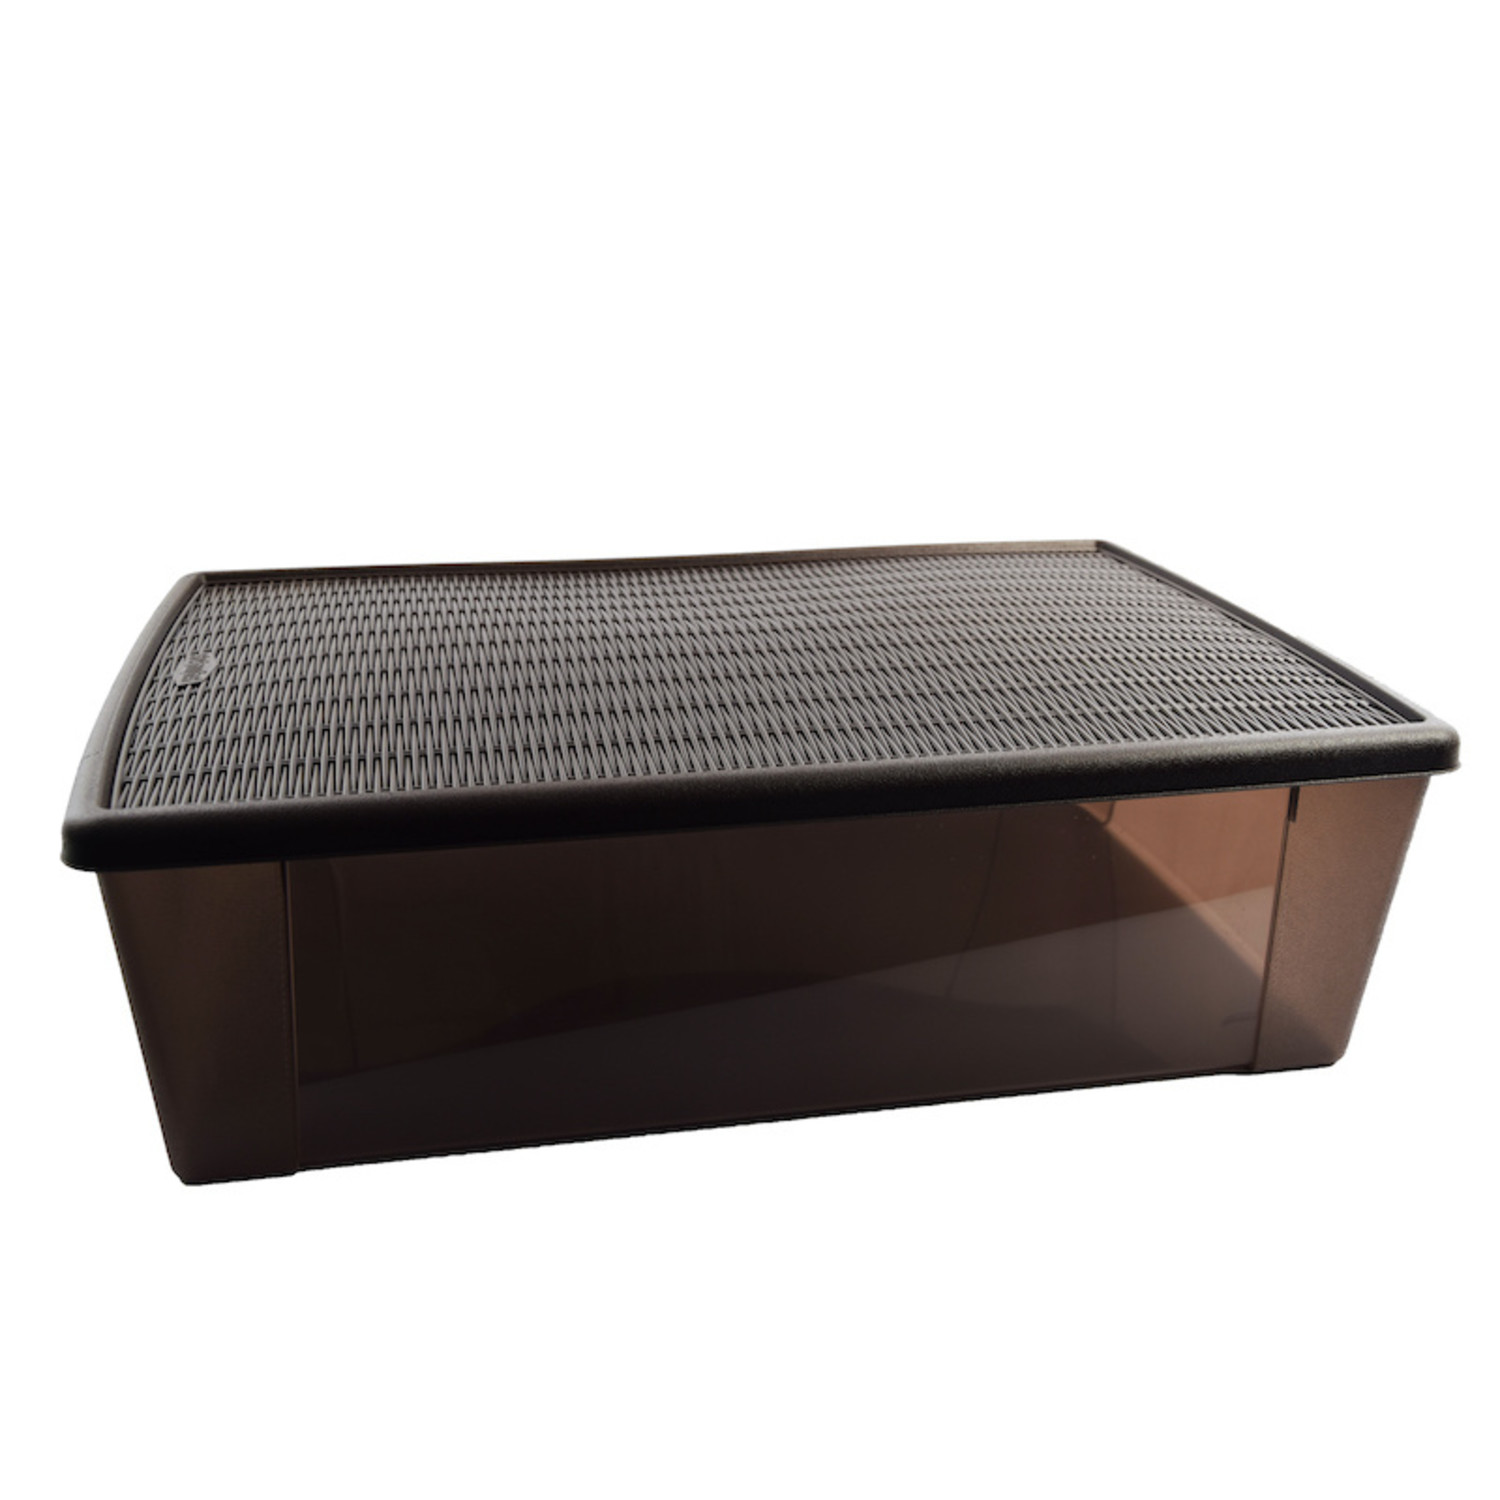 Maori Regelmatig Beginner Opbergbox - onderbedbox - Onderbedbox 32 liter chocolate bruin- 59 cm -  Discountershop.nl